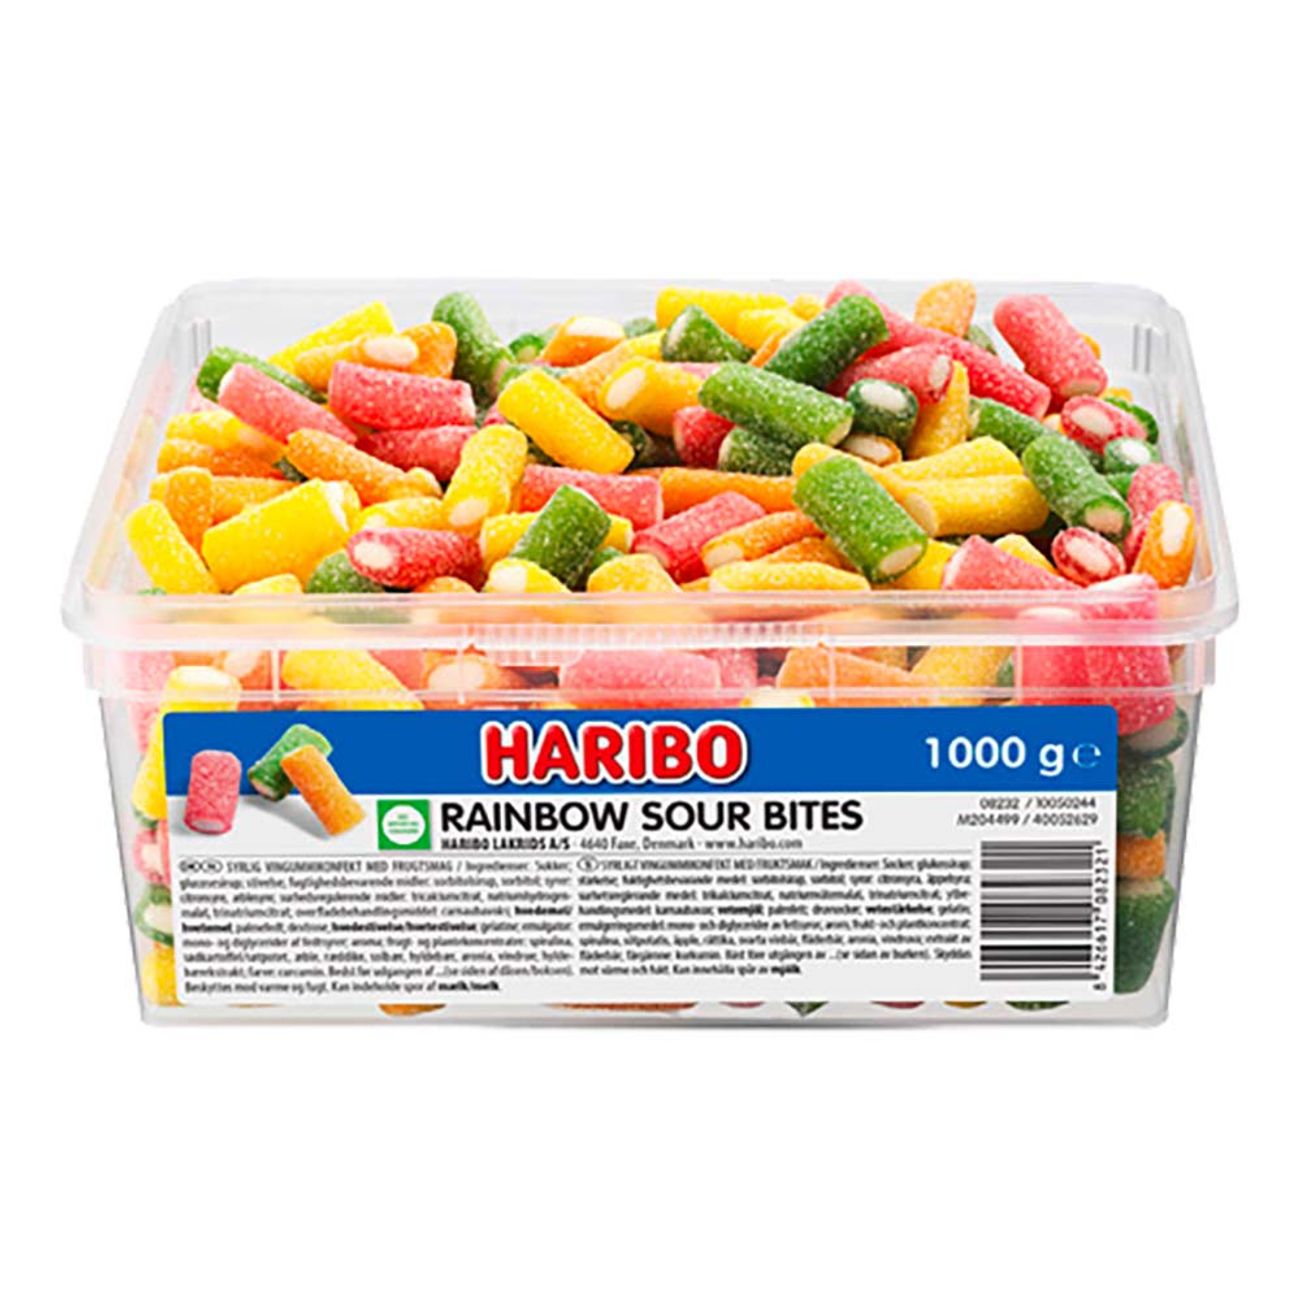 haribo-rainbow-sour-bites-storpack-94900-1